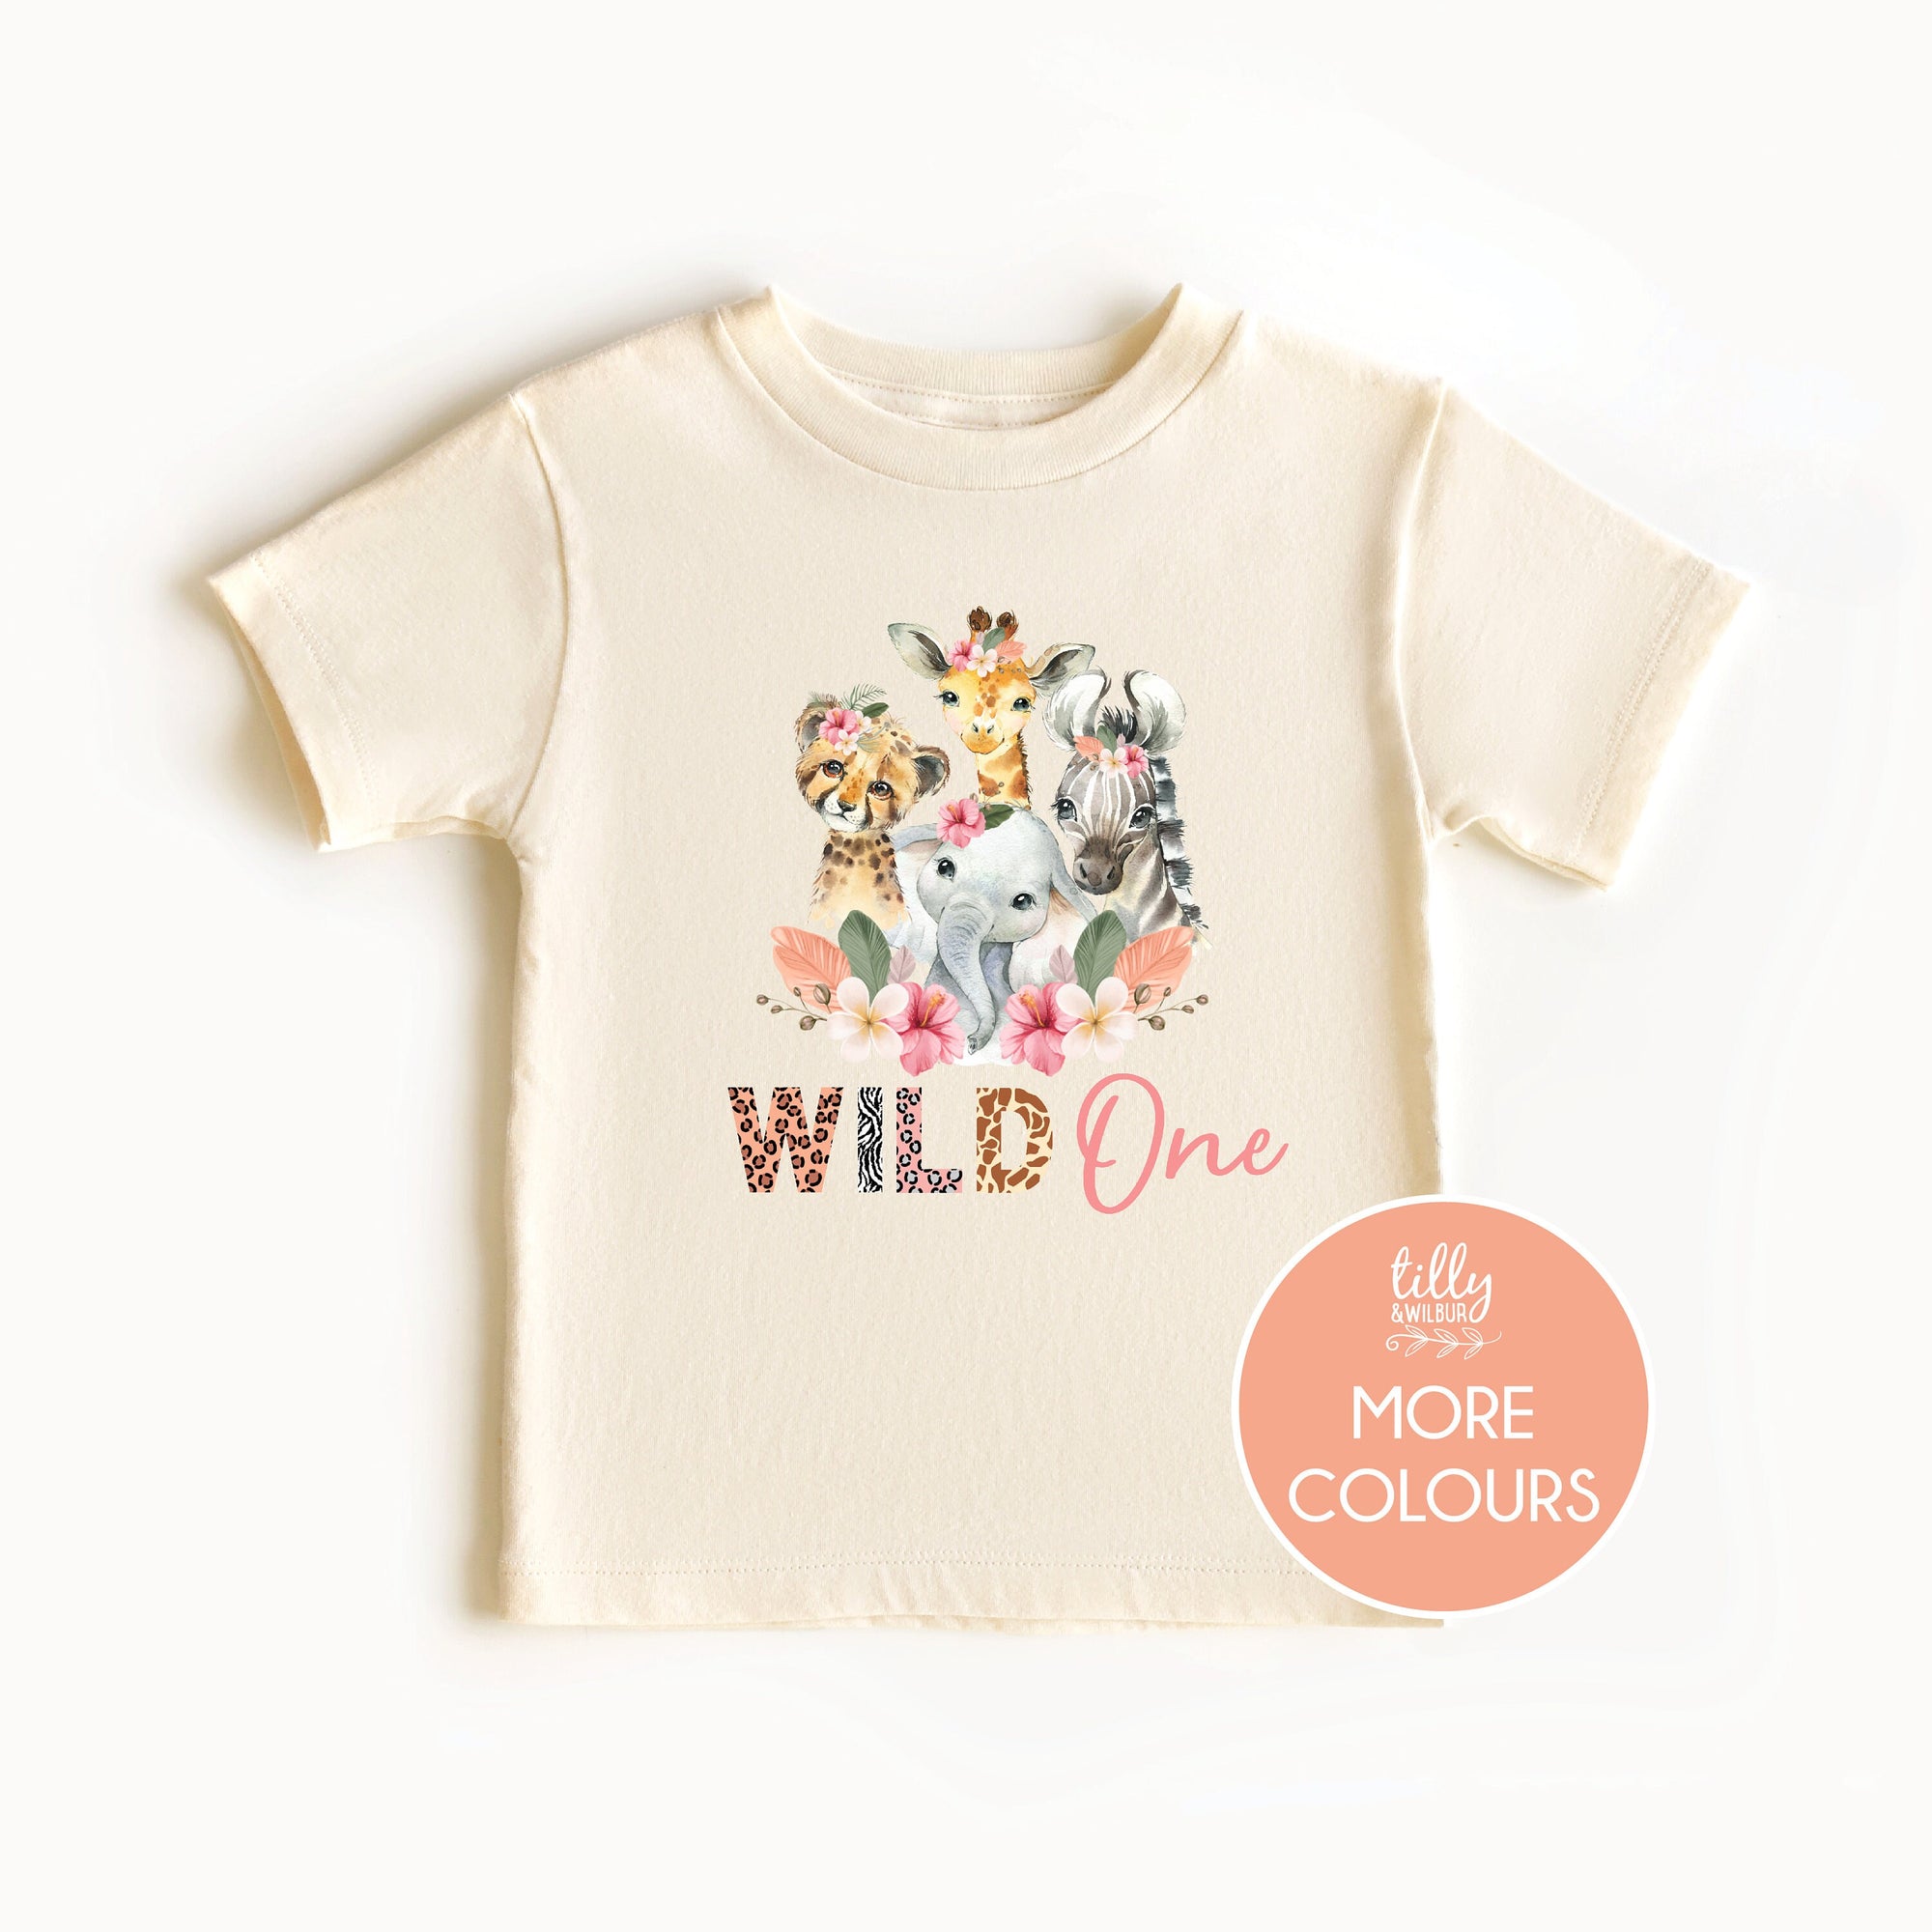 Wild One T-Shirt, 1st Birthday T-Shirt, Safari Animal Birthday T-Shirt, Safari Birthday Gift, 1st Birthday Baby Outfit, Jungle Animal Theme